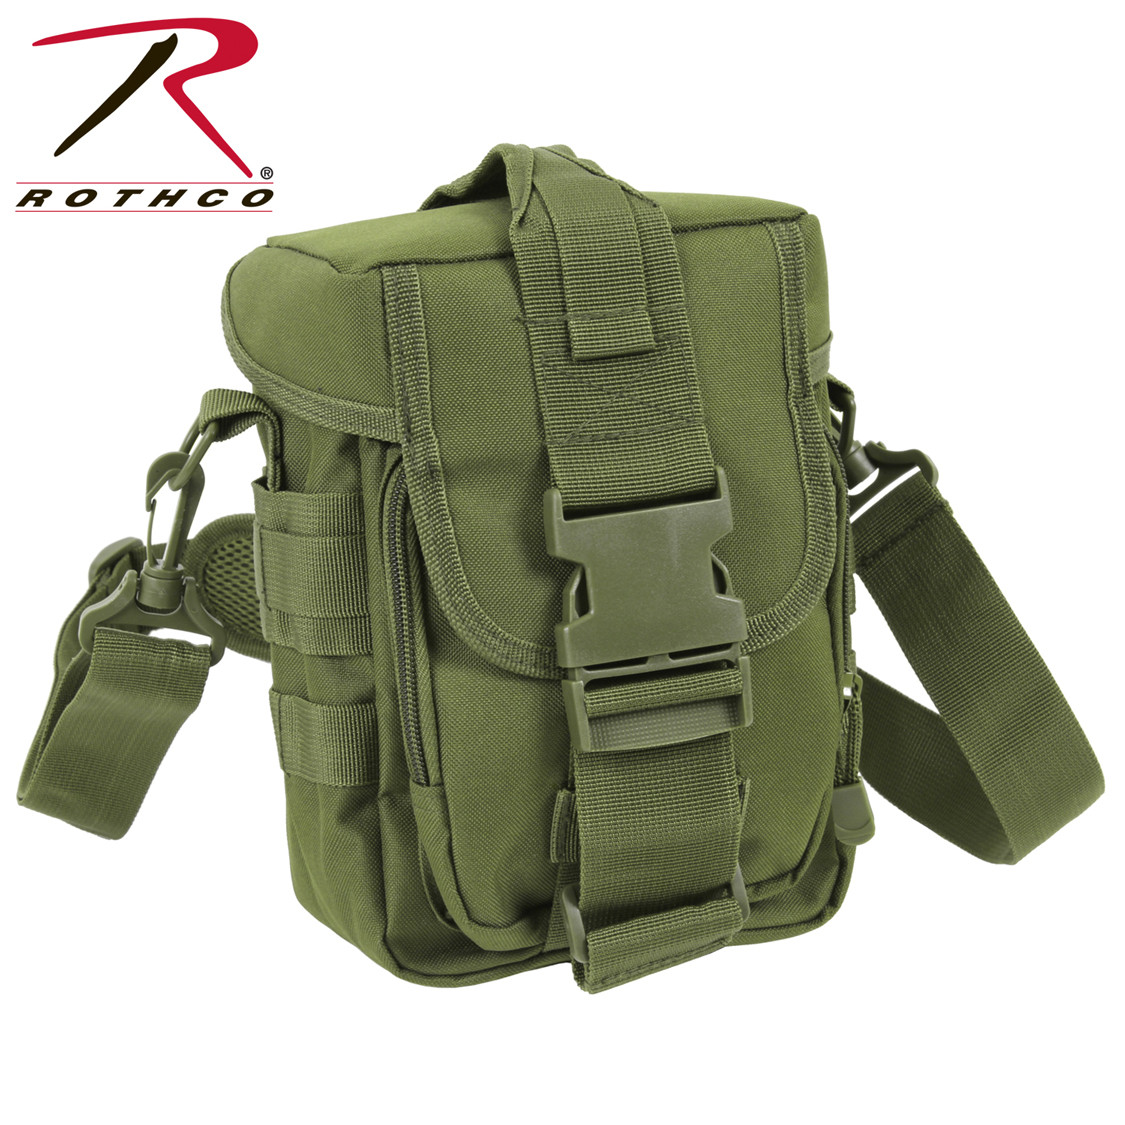 Shop Flexipack MOLLE Tactical Bags - Fatigues Army Navy Gear